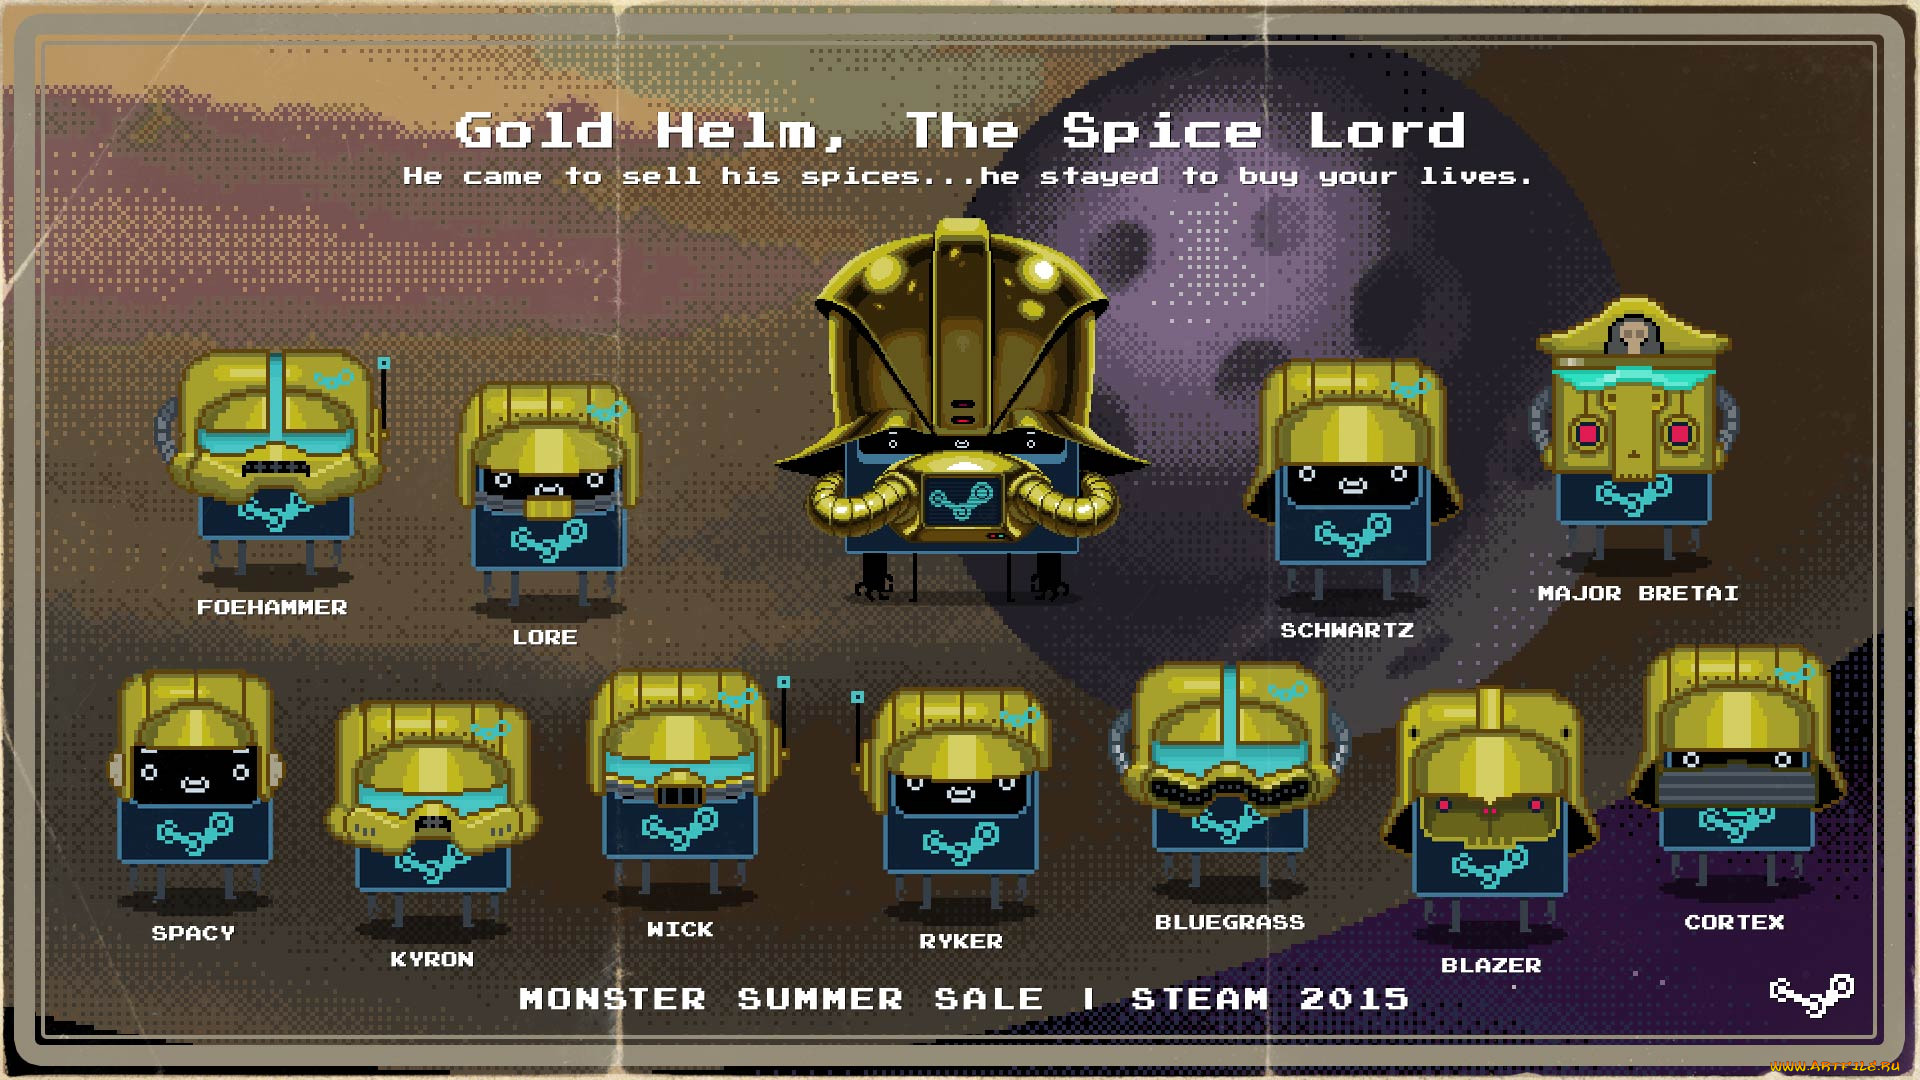 monster summer sale,  , ~~~~~~, , gold, helm, steam